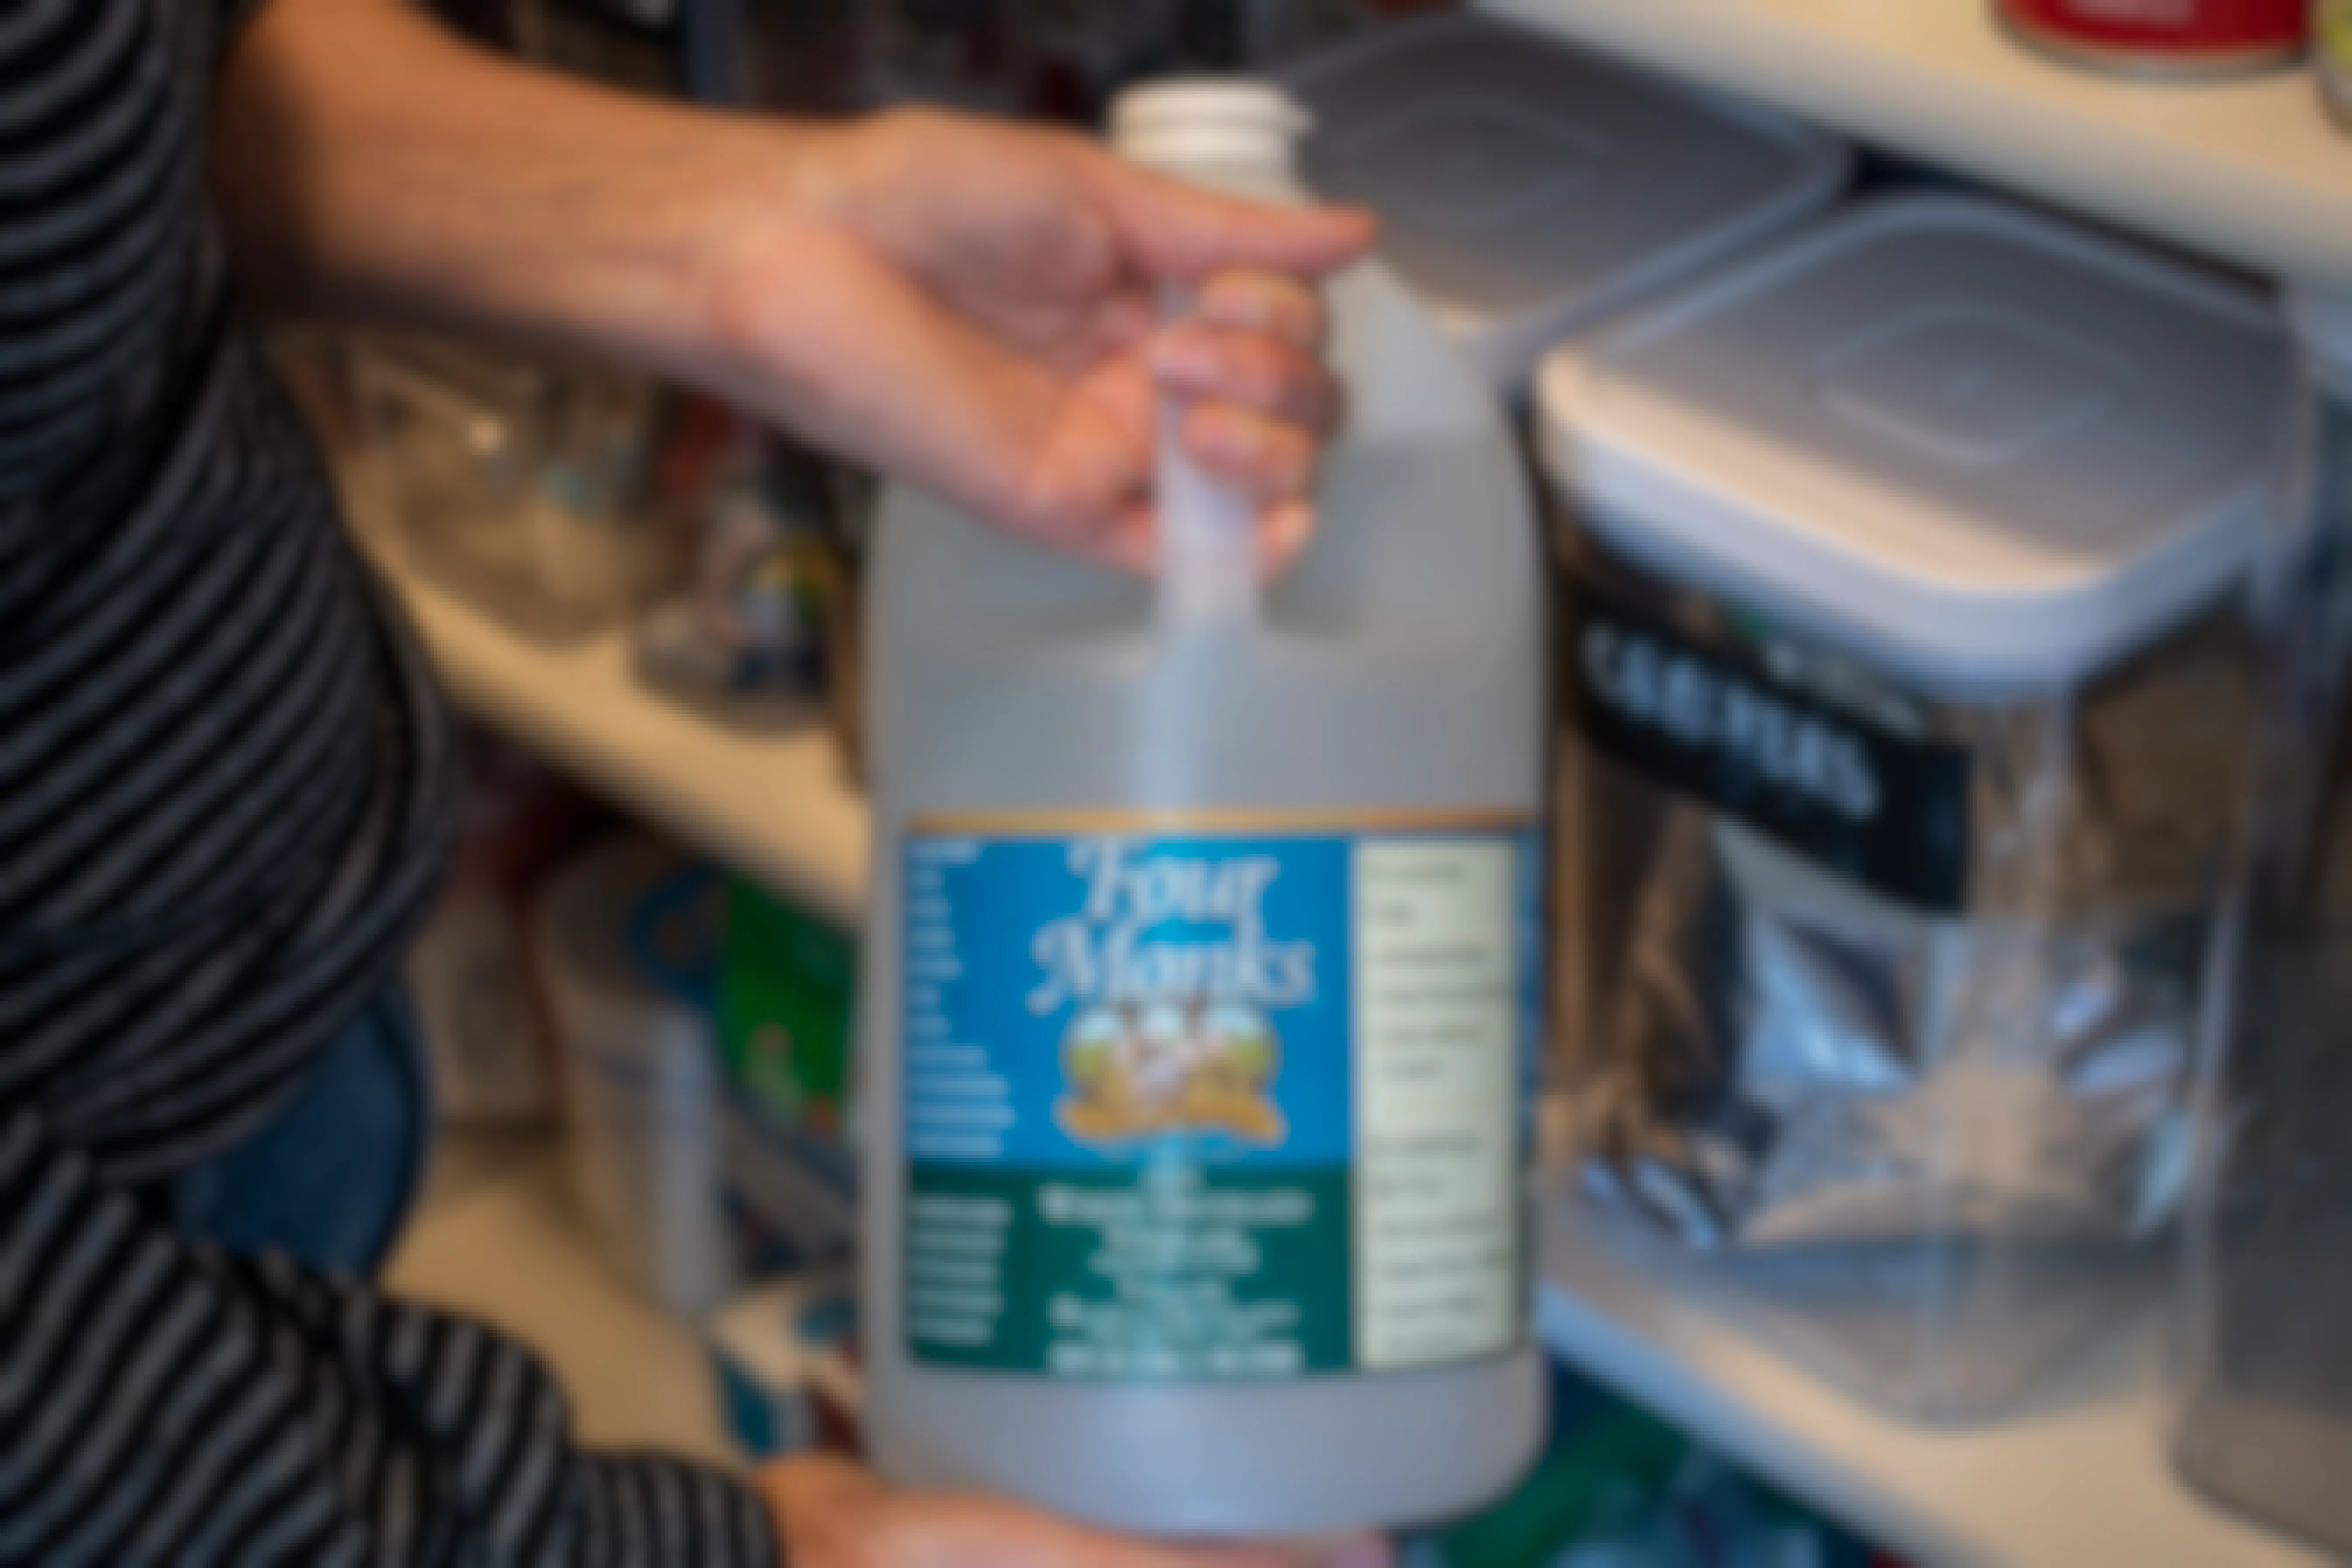 A bottle of white vinegar in a pantry